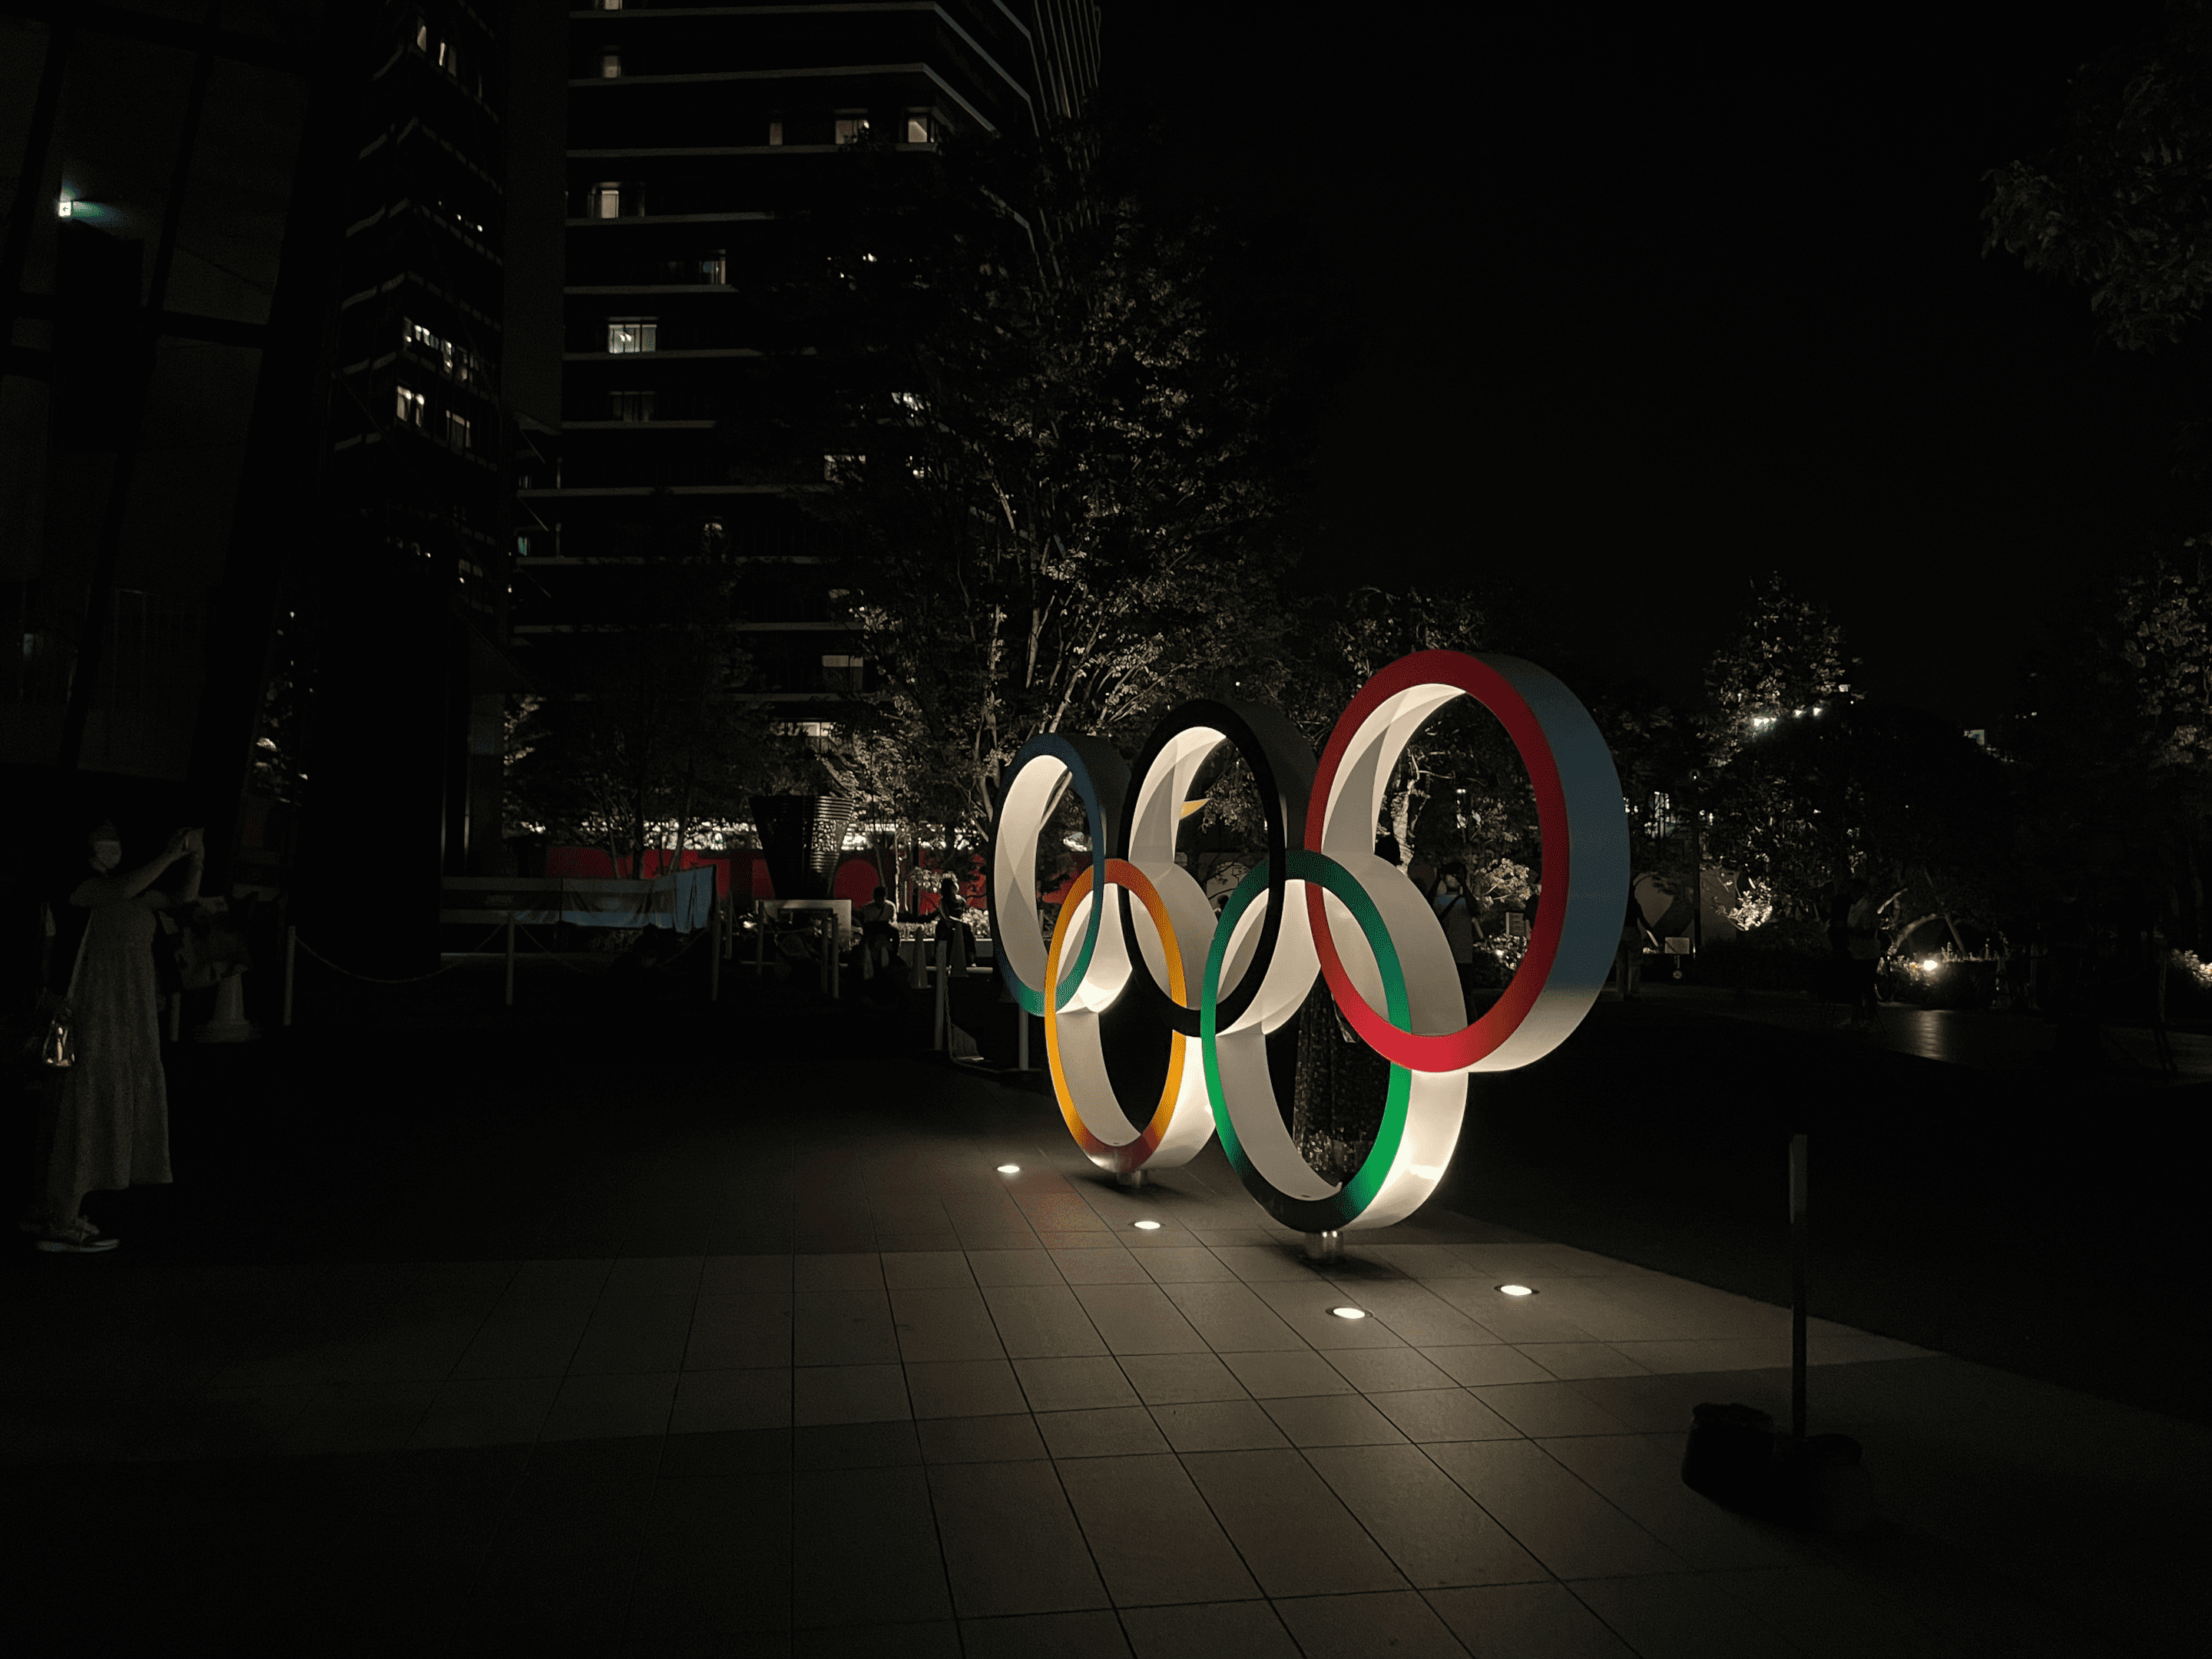 The 2020 Tokyo Olympics